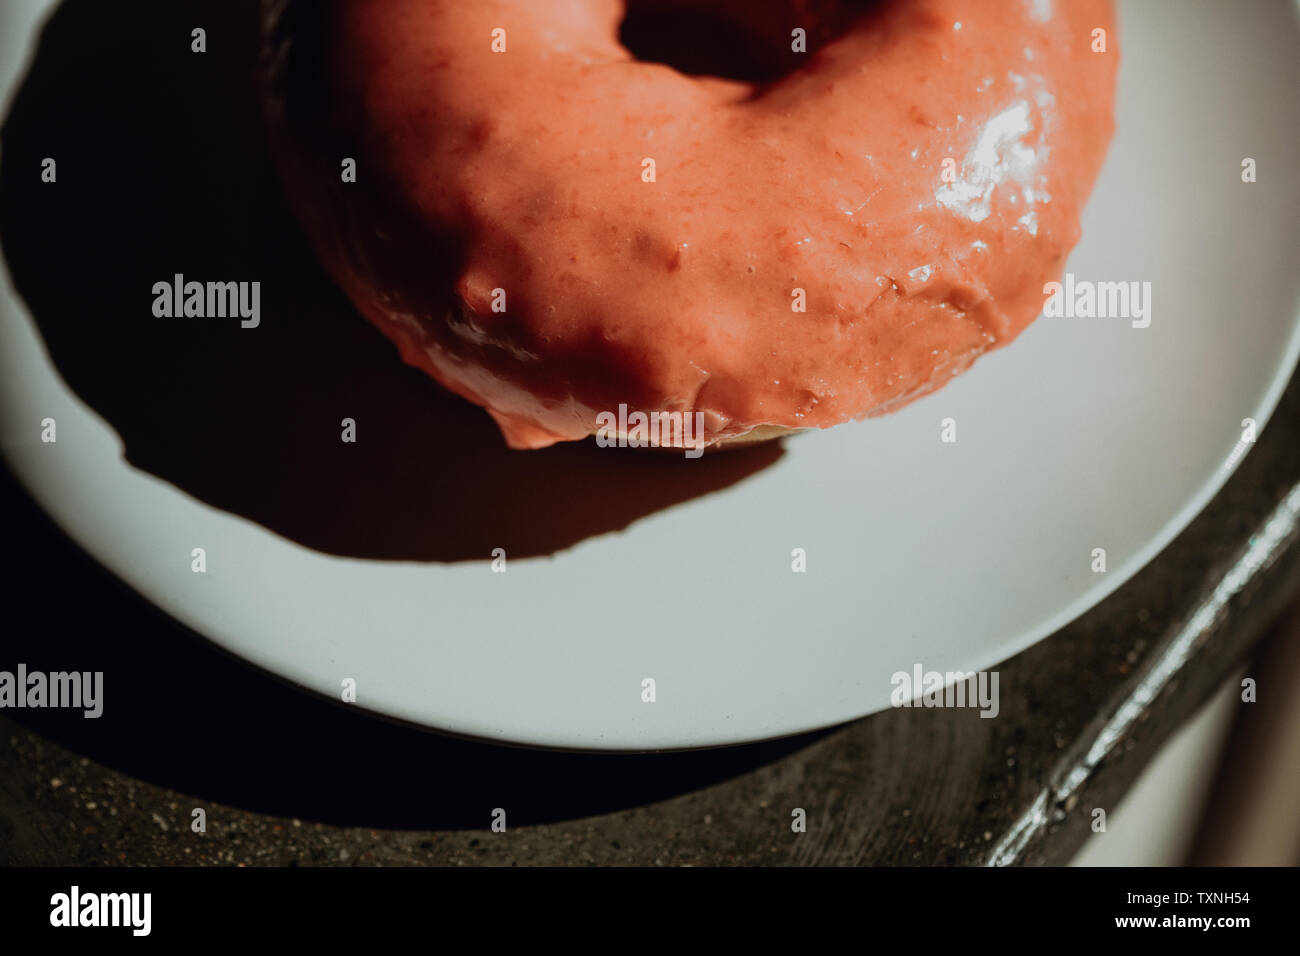 Helado de donut hole en cafe contador, recortado cerca, vista superior Foto de stock